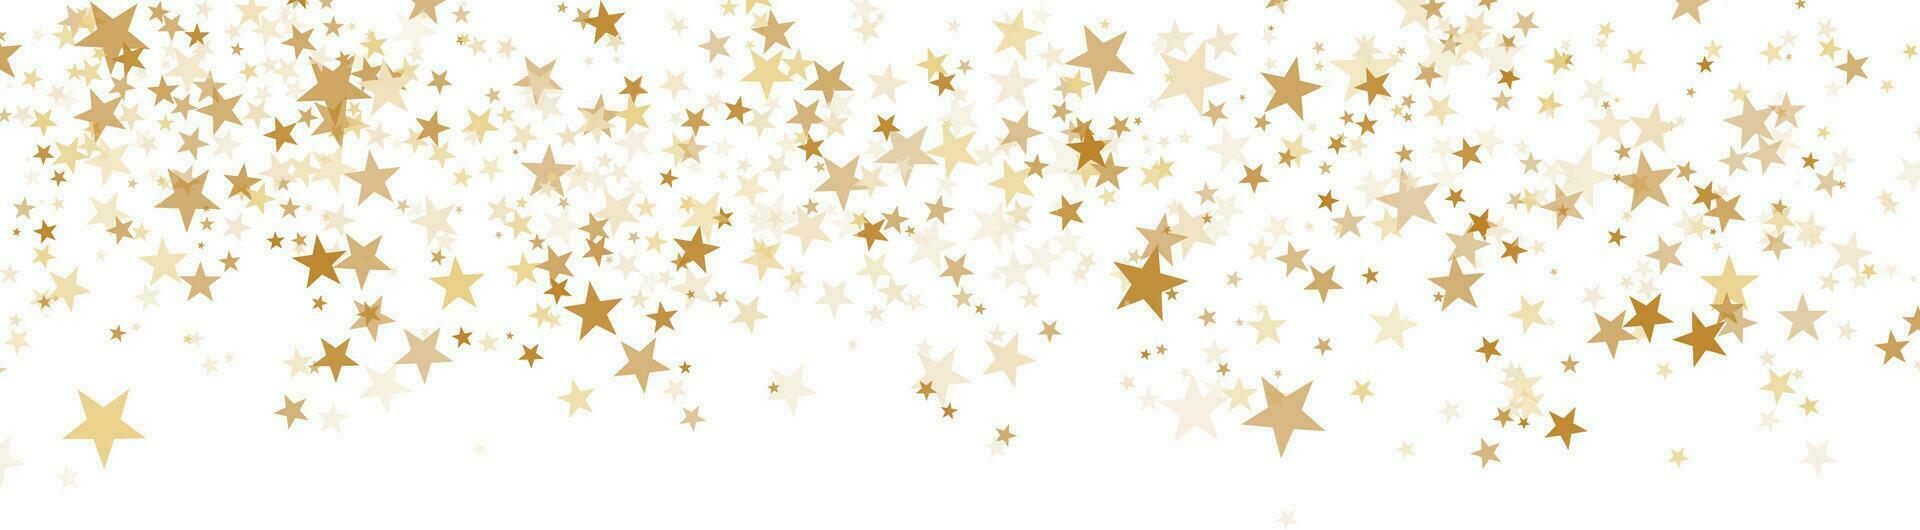 goud ster confetti, isoleren vector banier, verspreide vormen ontwerp element feestelijk achtergrond